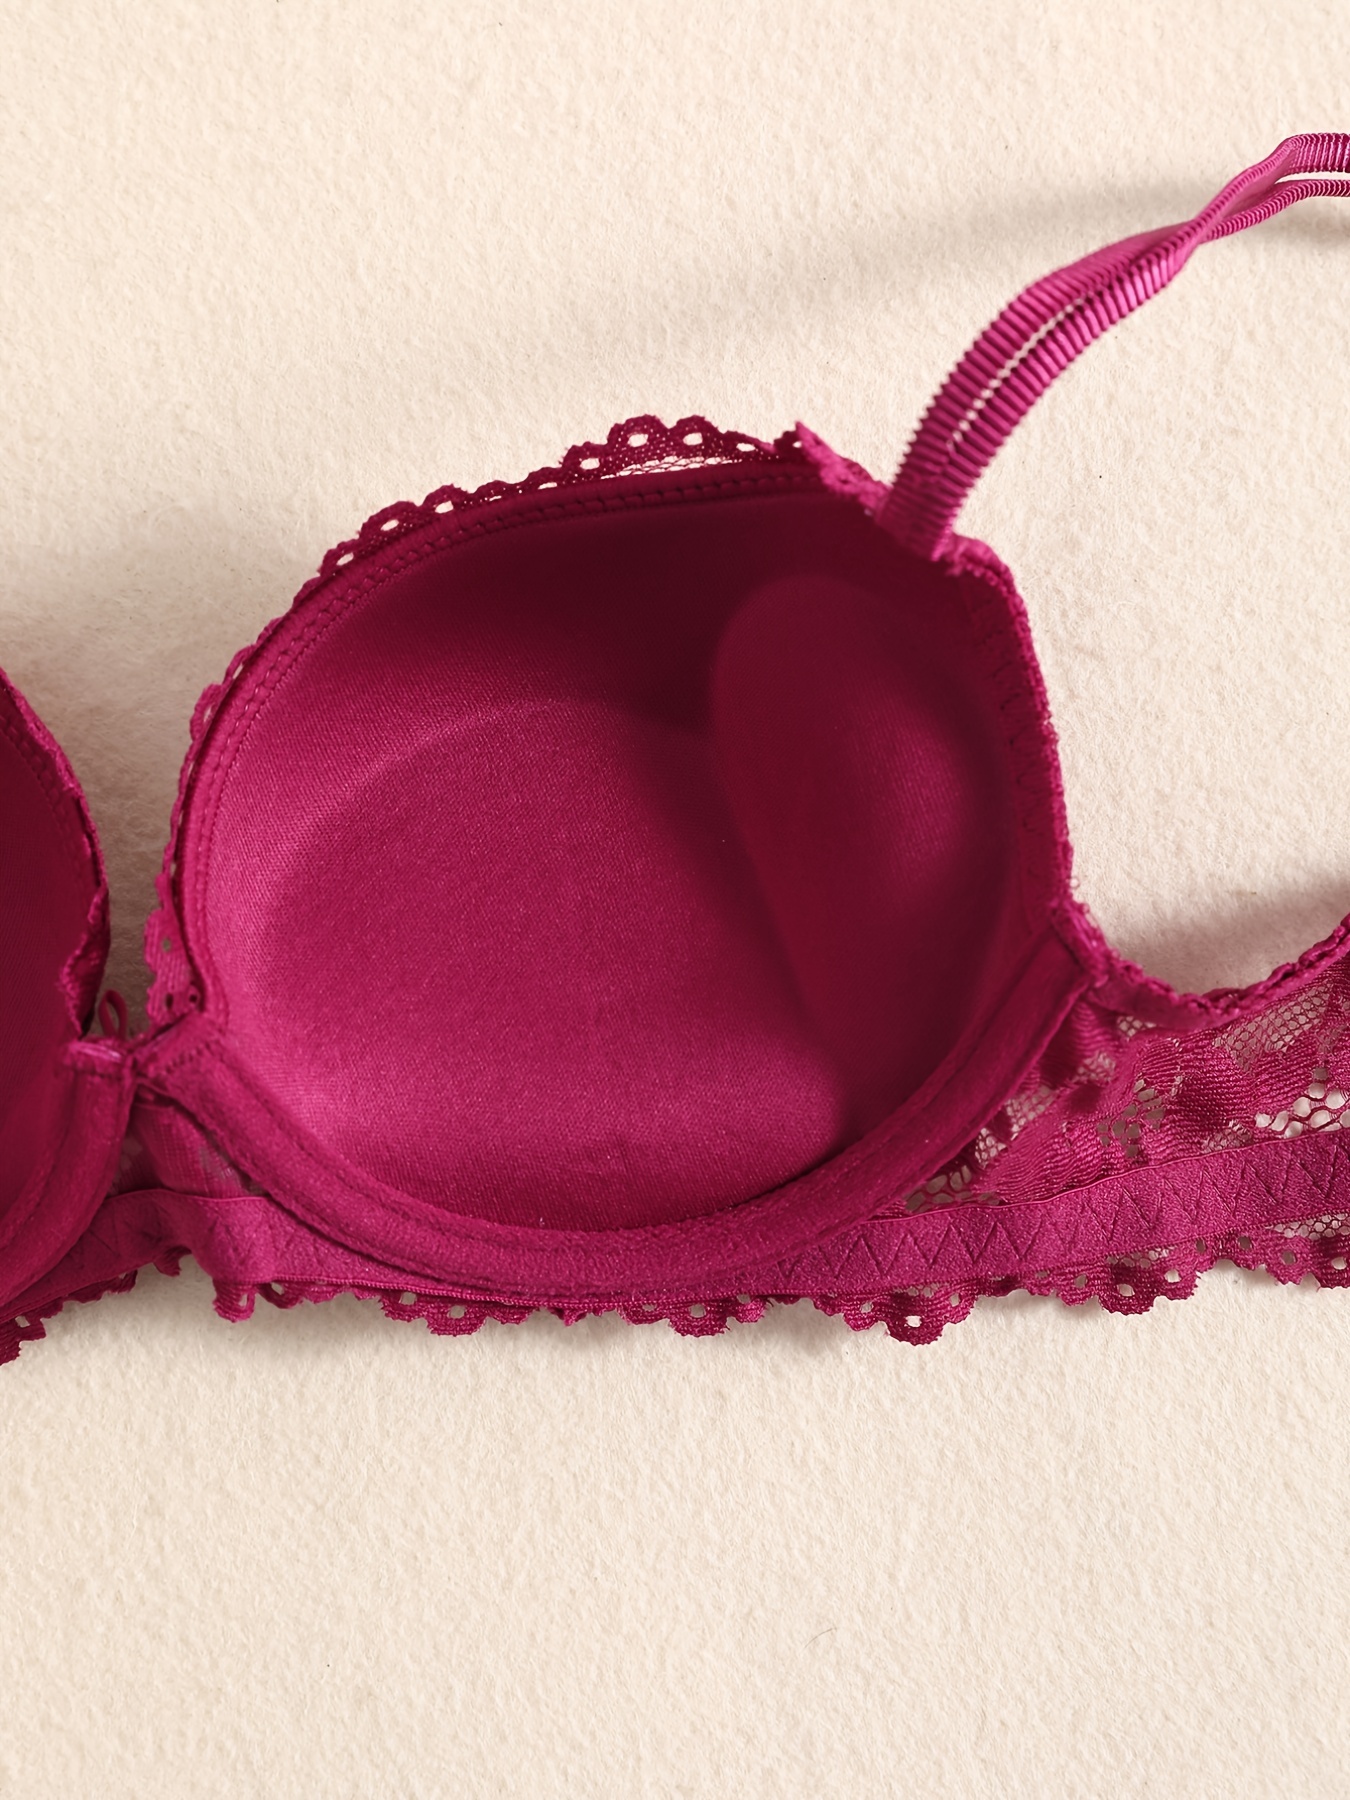 Victoria's Secret, Intimates & Sleepwear, Vs Bra 32c Hot Pink Double  Pushup